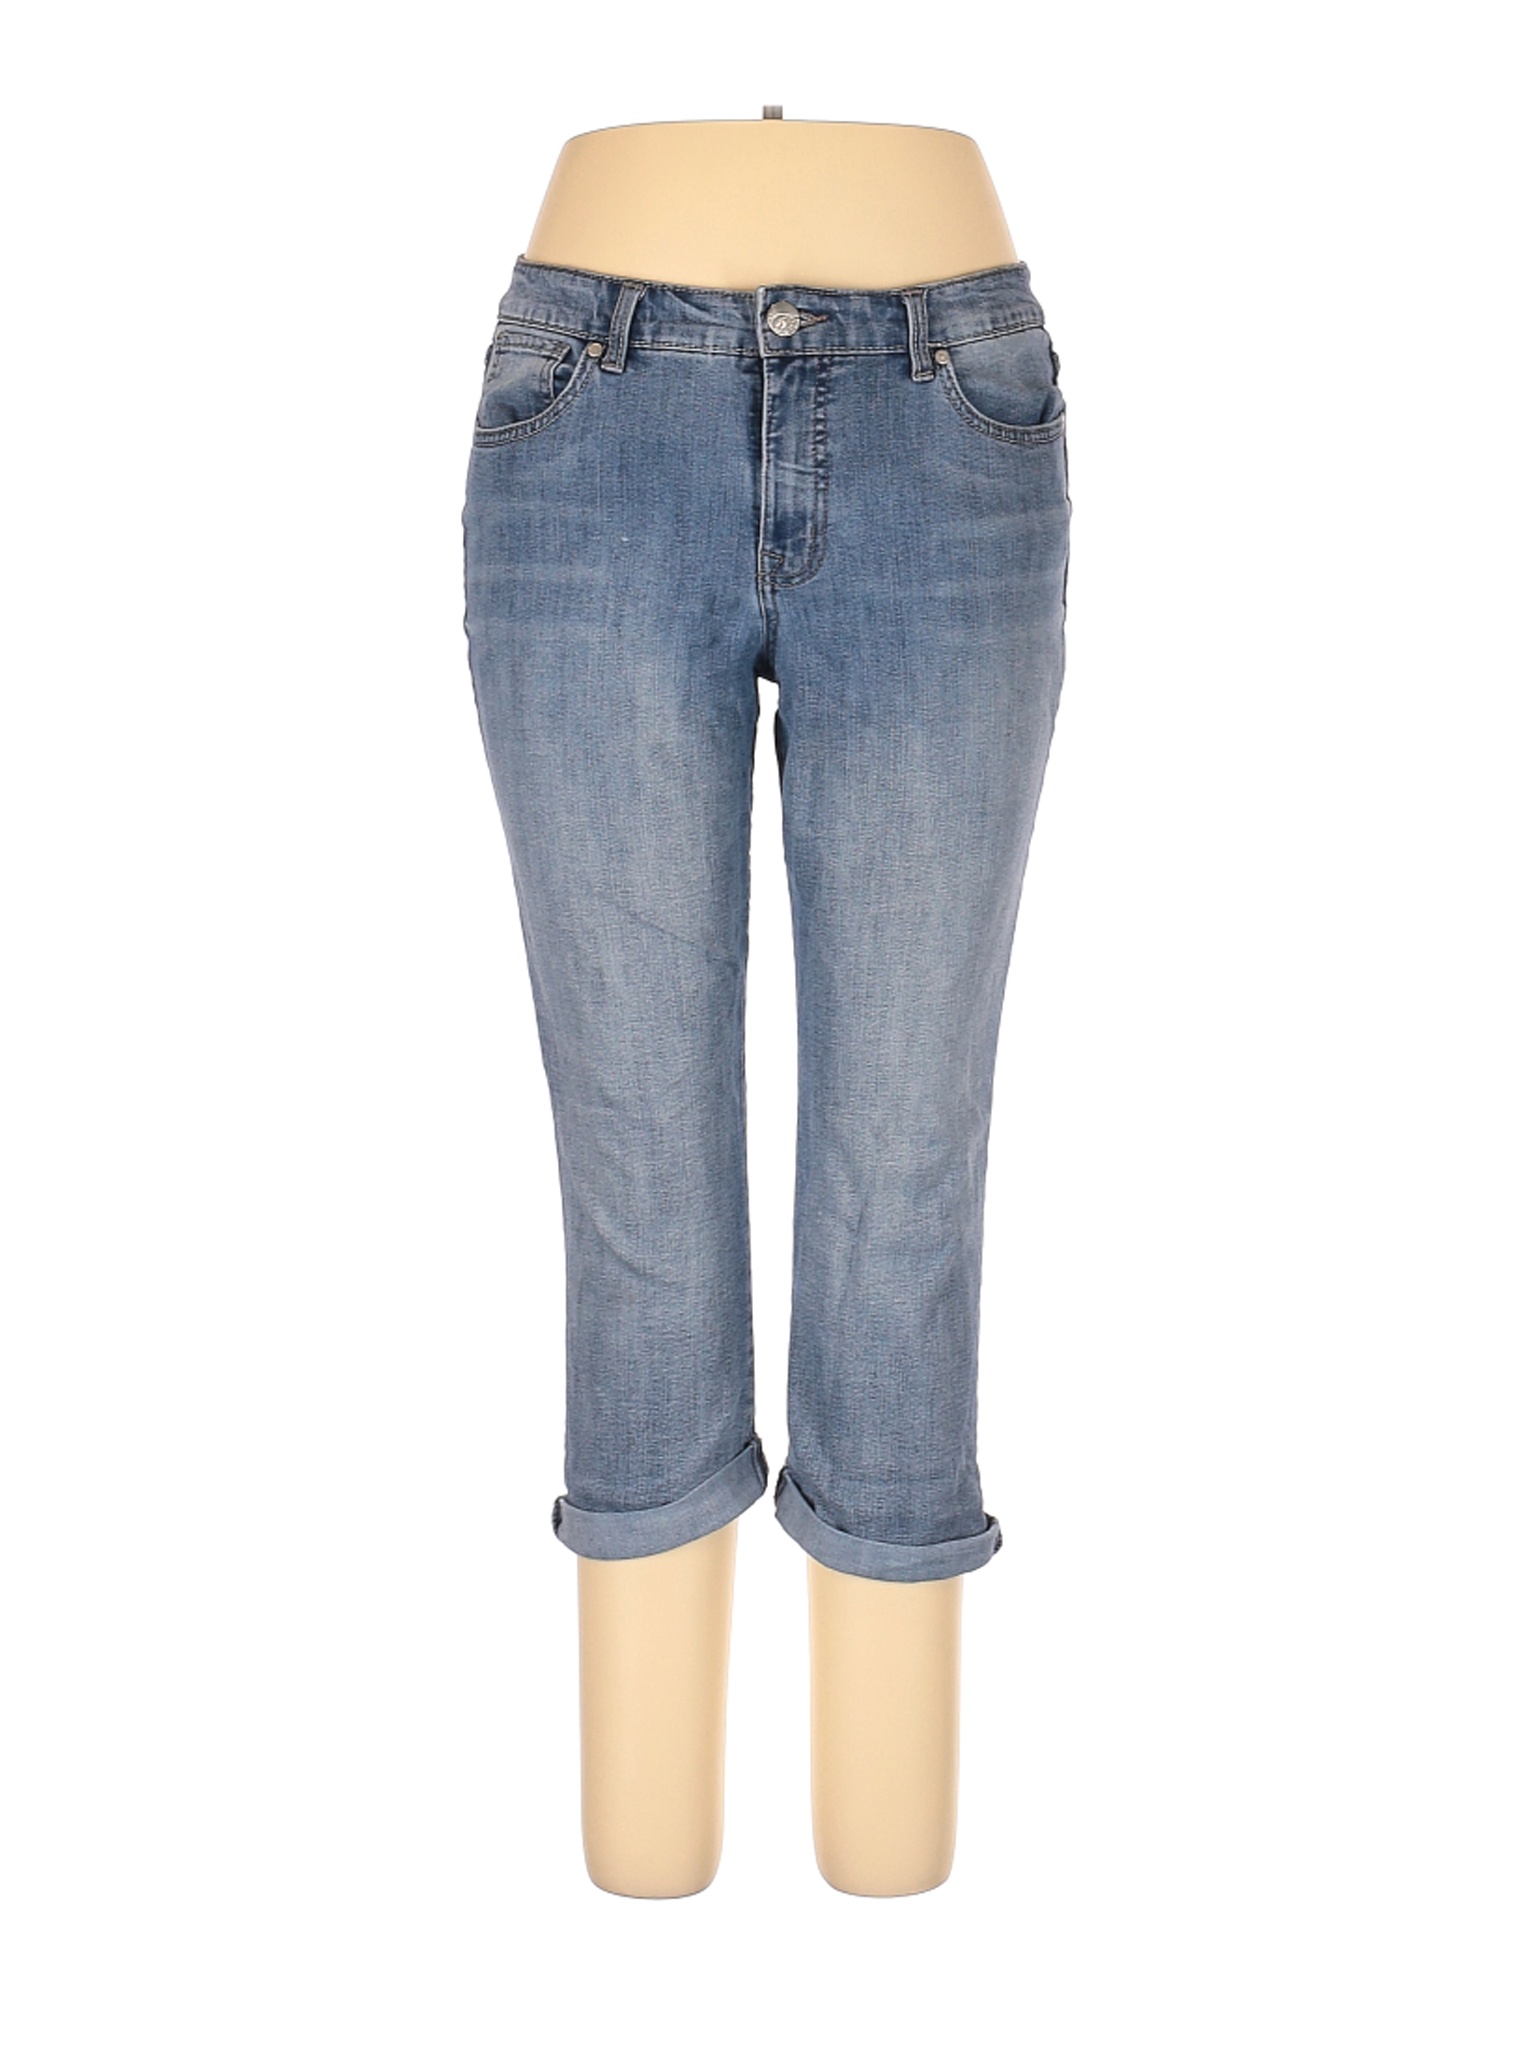 Code Bleu Women Blue Jeans 14 Petites | eBay